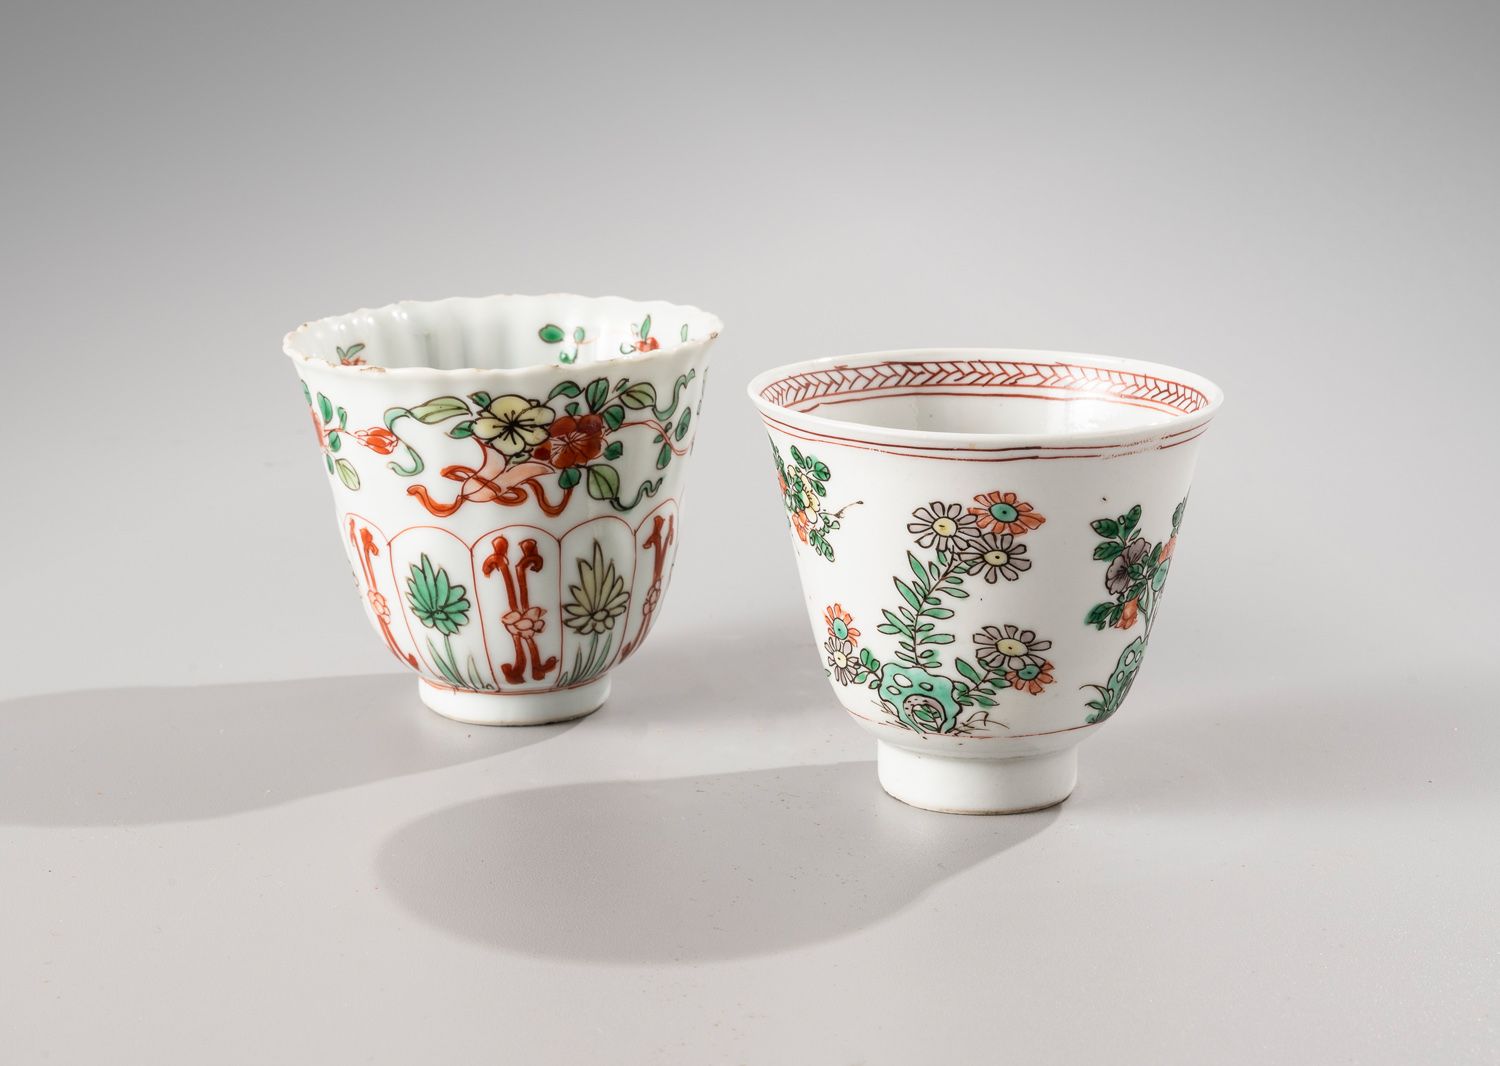 Null 中国，康熙时期，18世纪

两个绿色家庭瓷器和搪瓷雪糕

一幅装饰有花卉图案，另一幅装饰有牡丹花。

牡丹花和岩石。

H.7.6和7厘米

(第一件&hellip;